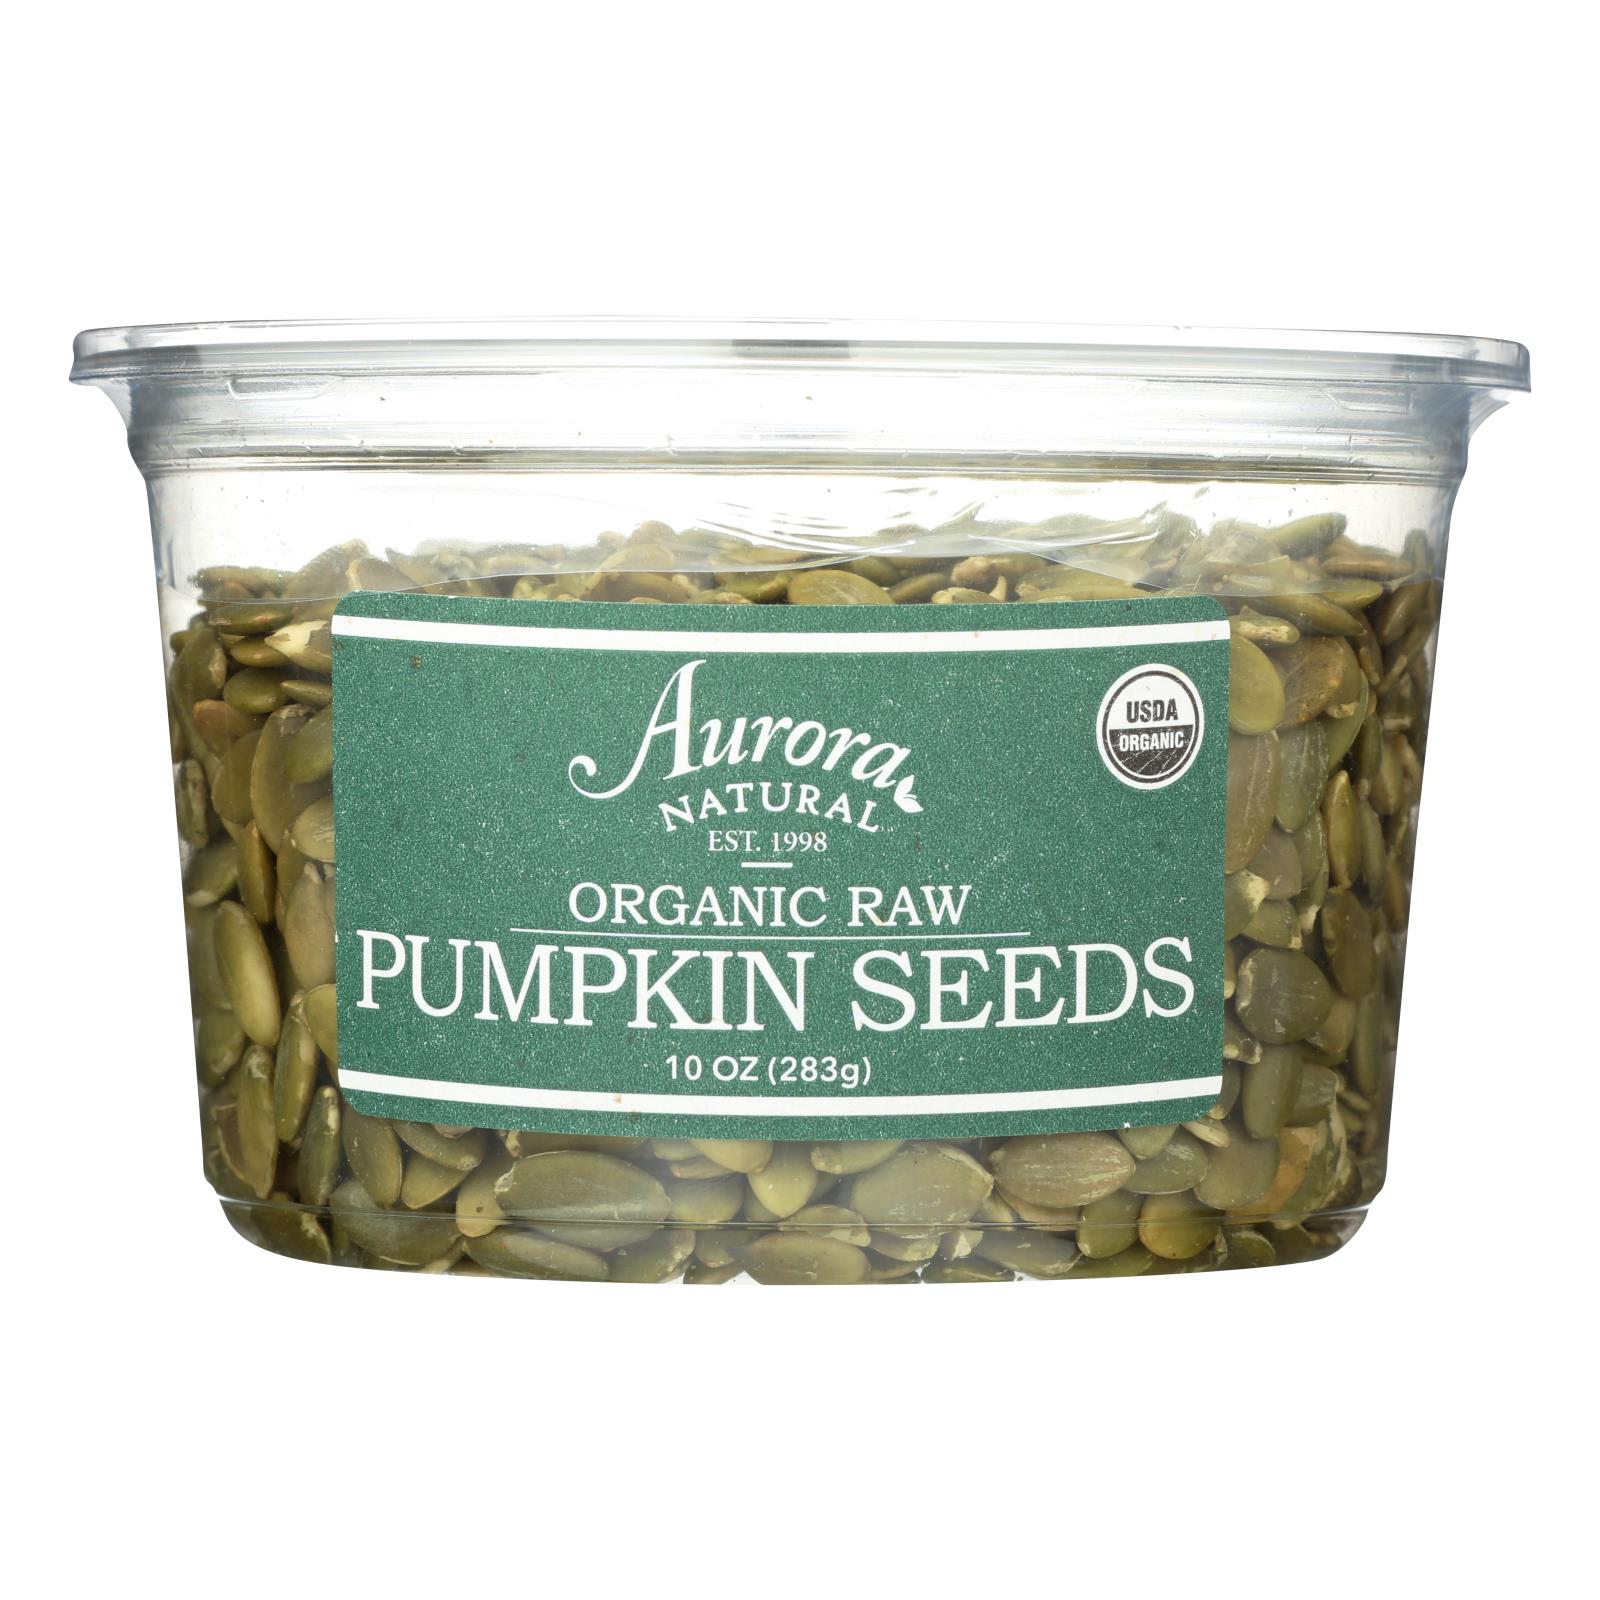 Aurora Natural Products - Organic Raw Pumpkin Seeds - 12개 묶음상품 - 10 oz.